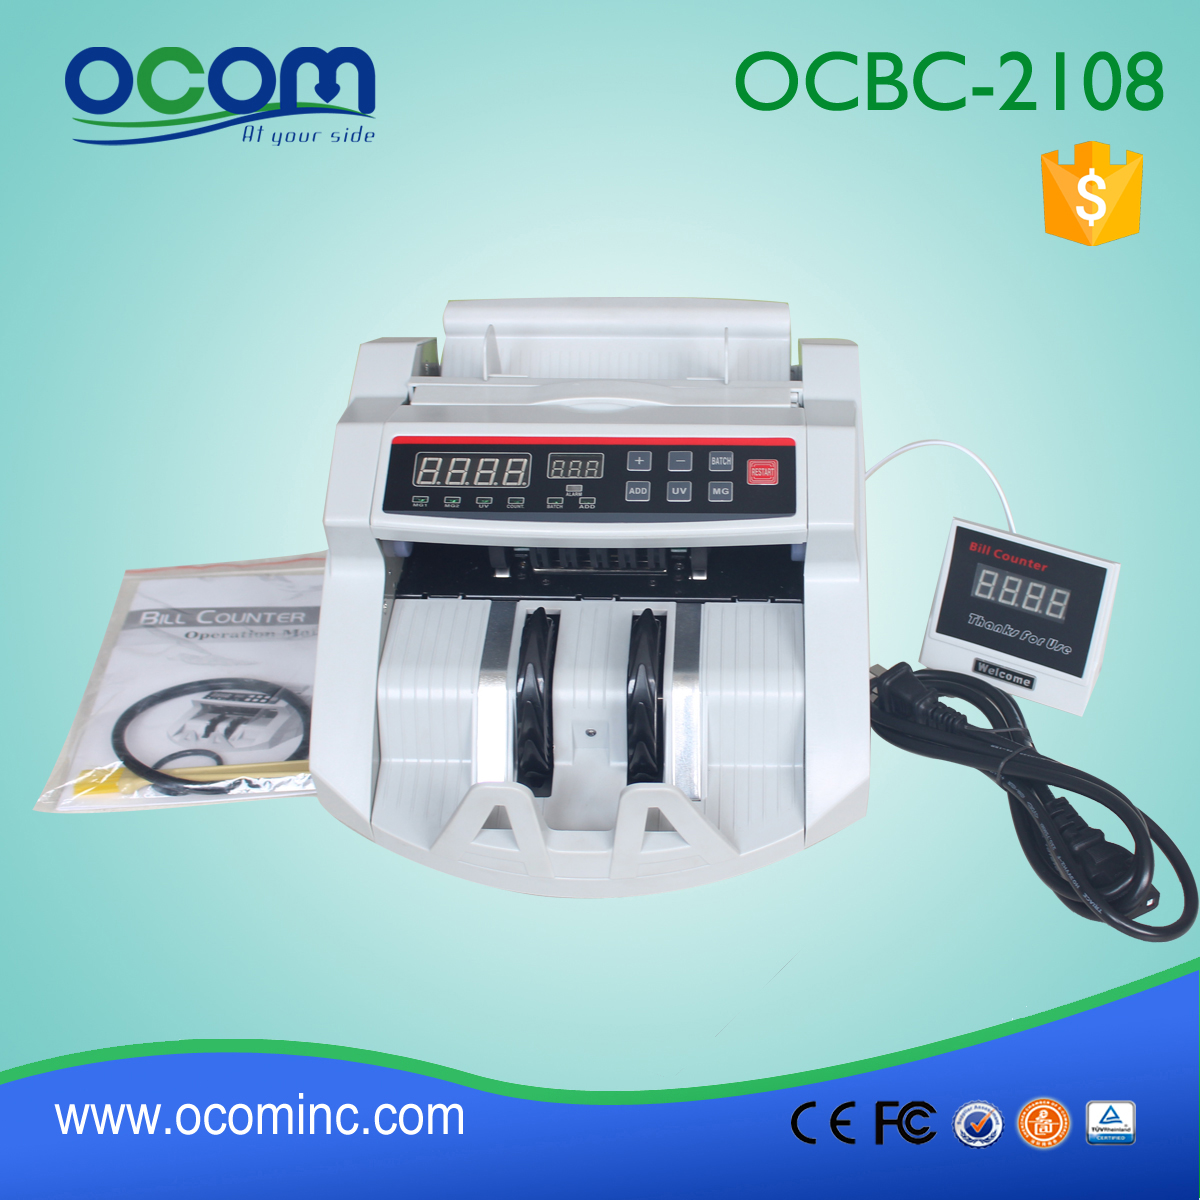 OCBC-2108 μετρητής φθηνό χρήμα που κατασκευάζονται στην Κίνα